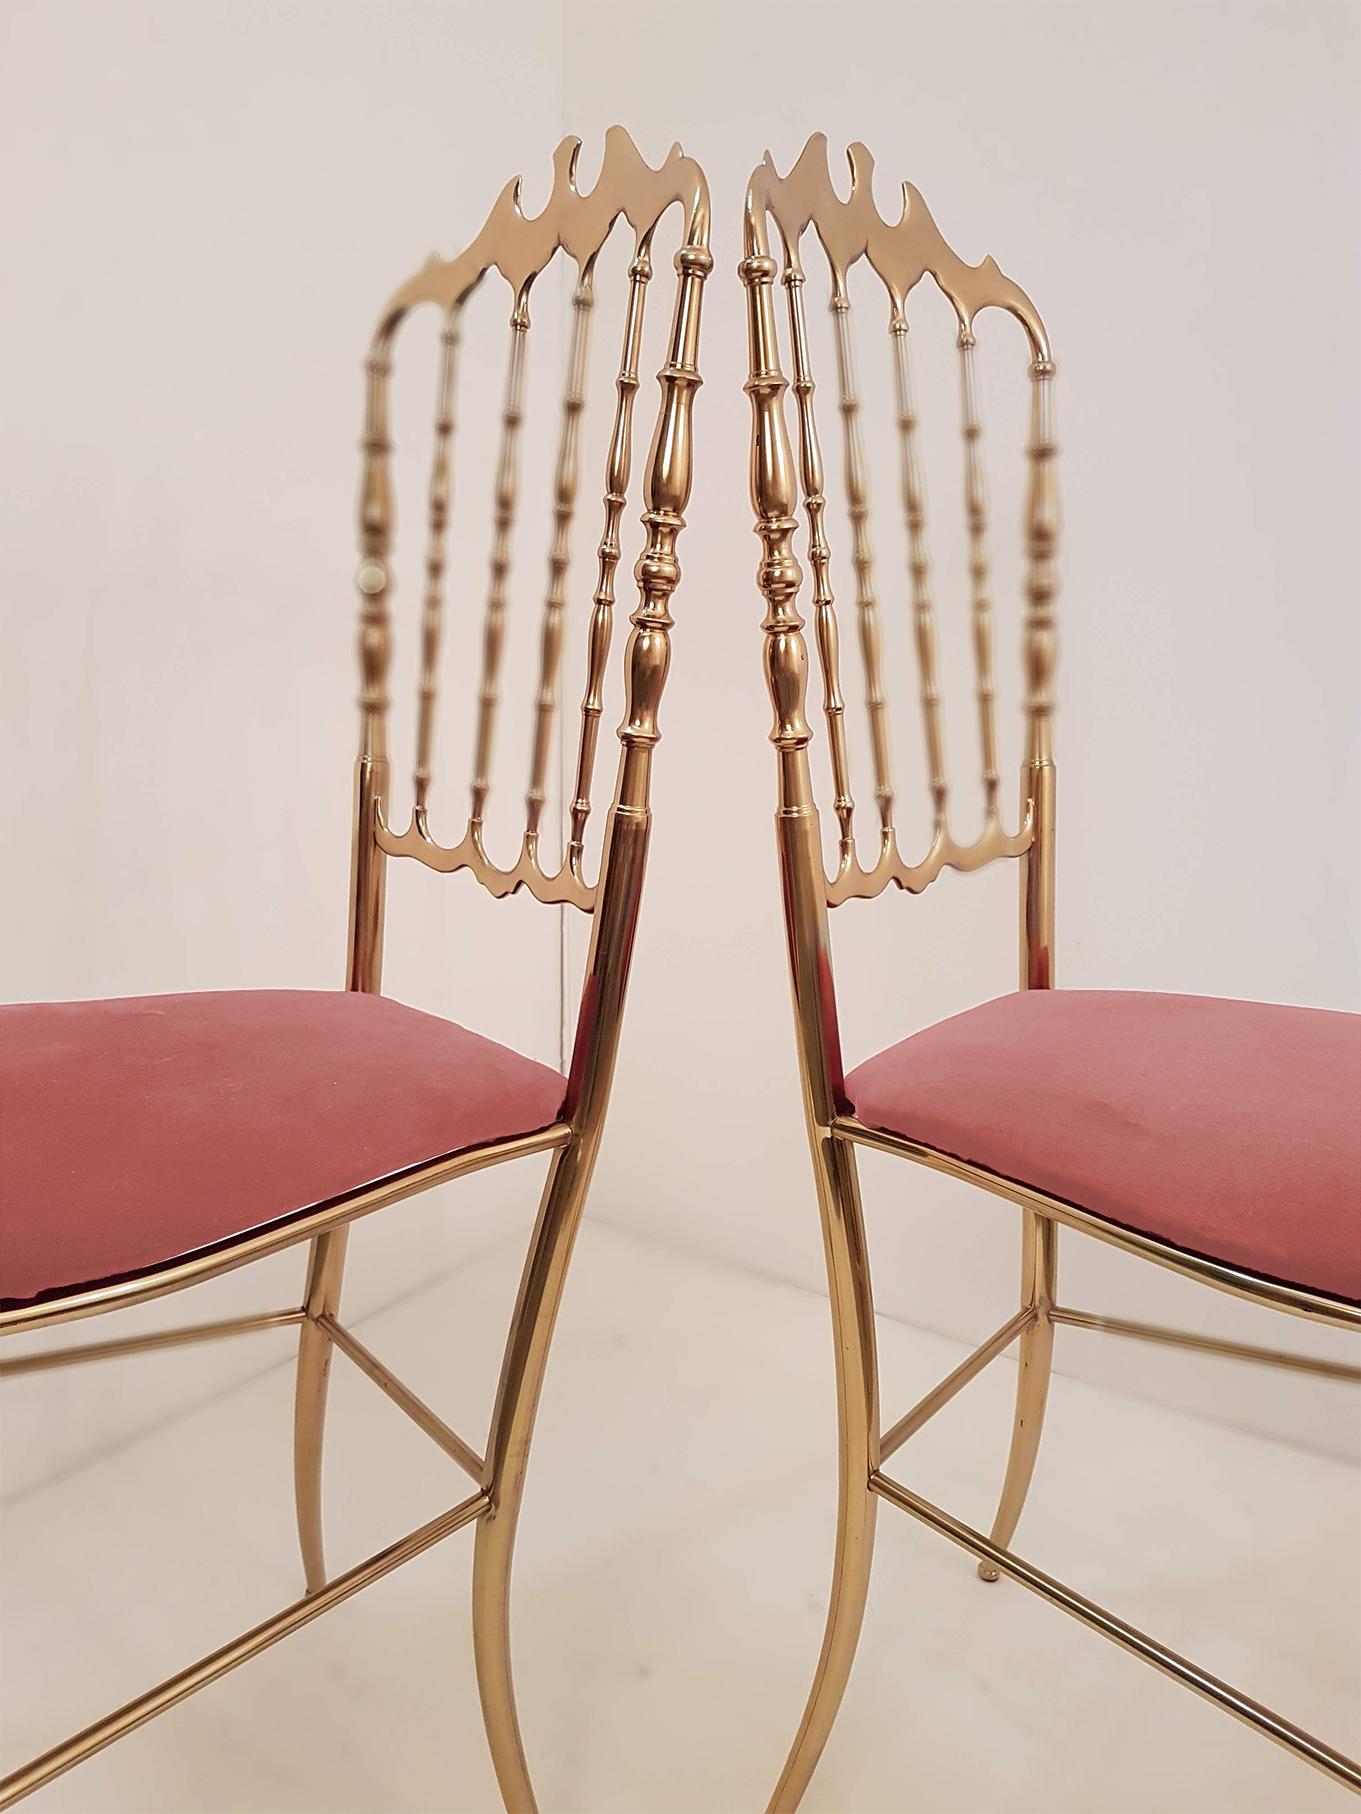 Pair of Italian Massive Brass Chairs by Chiavari, Upholstery Pink Velvet 2